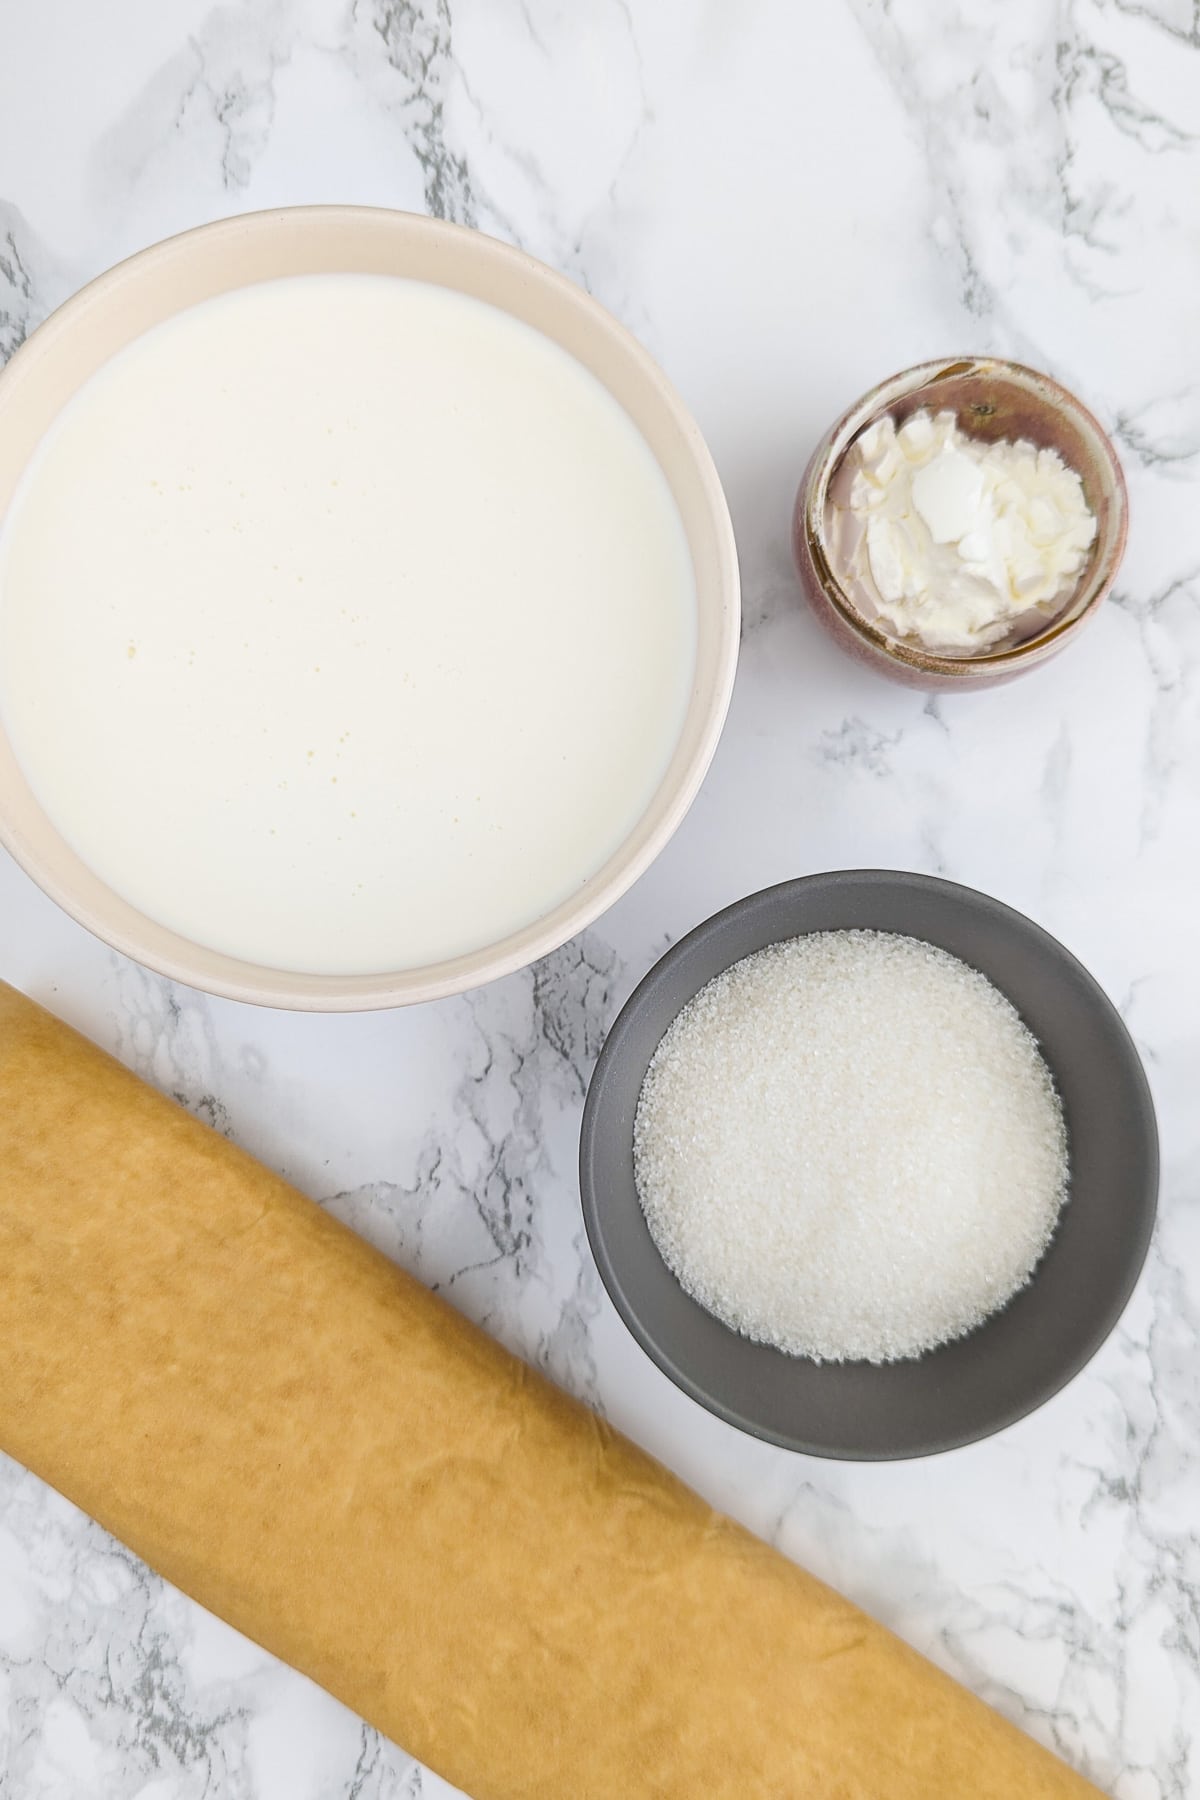 Vanila, cream, sugar and dough on a white marble table.